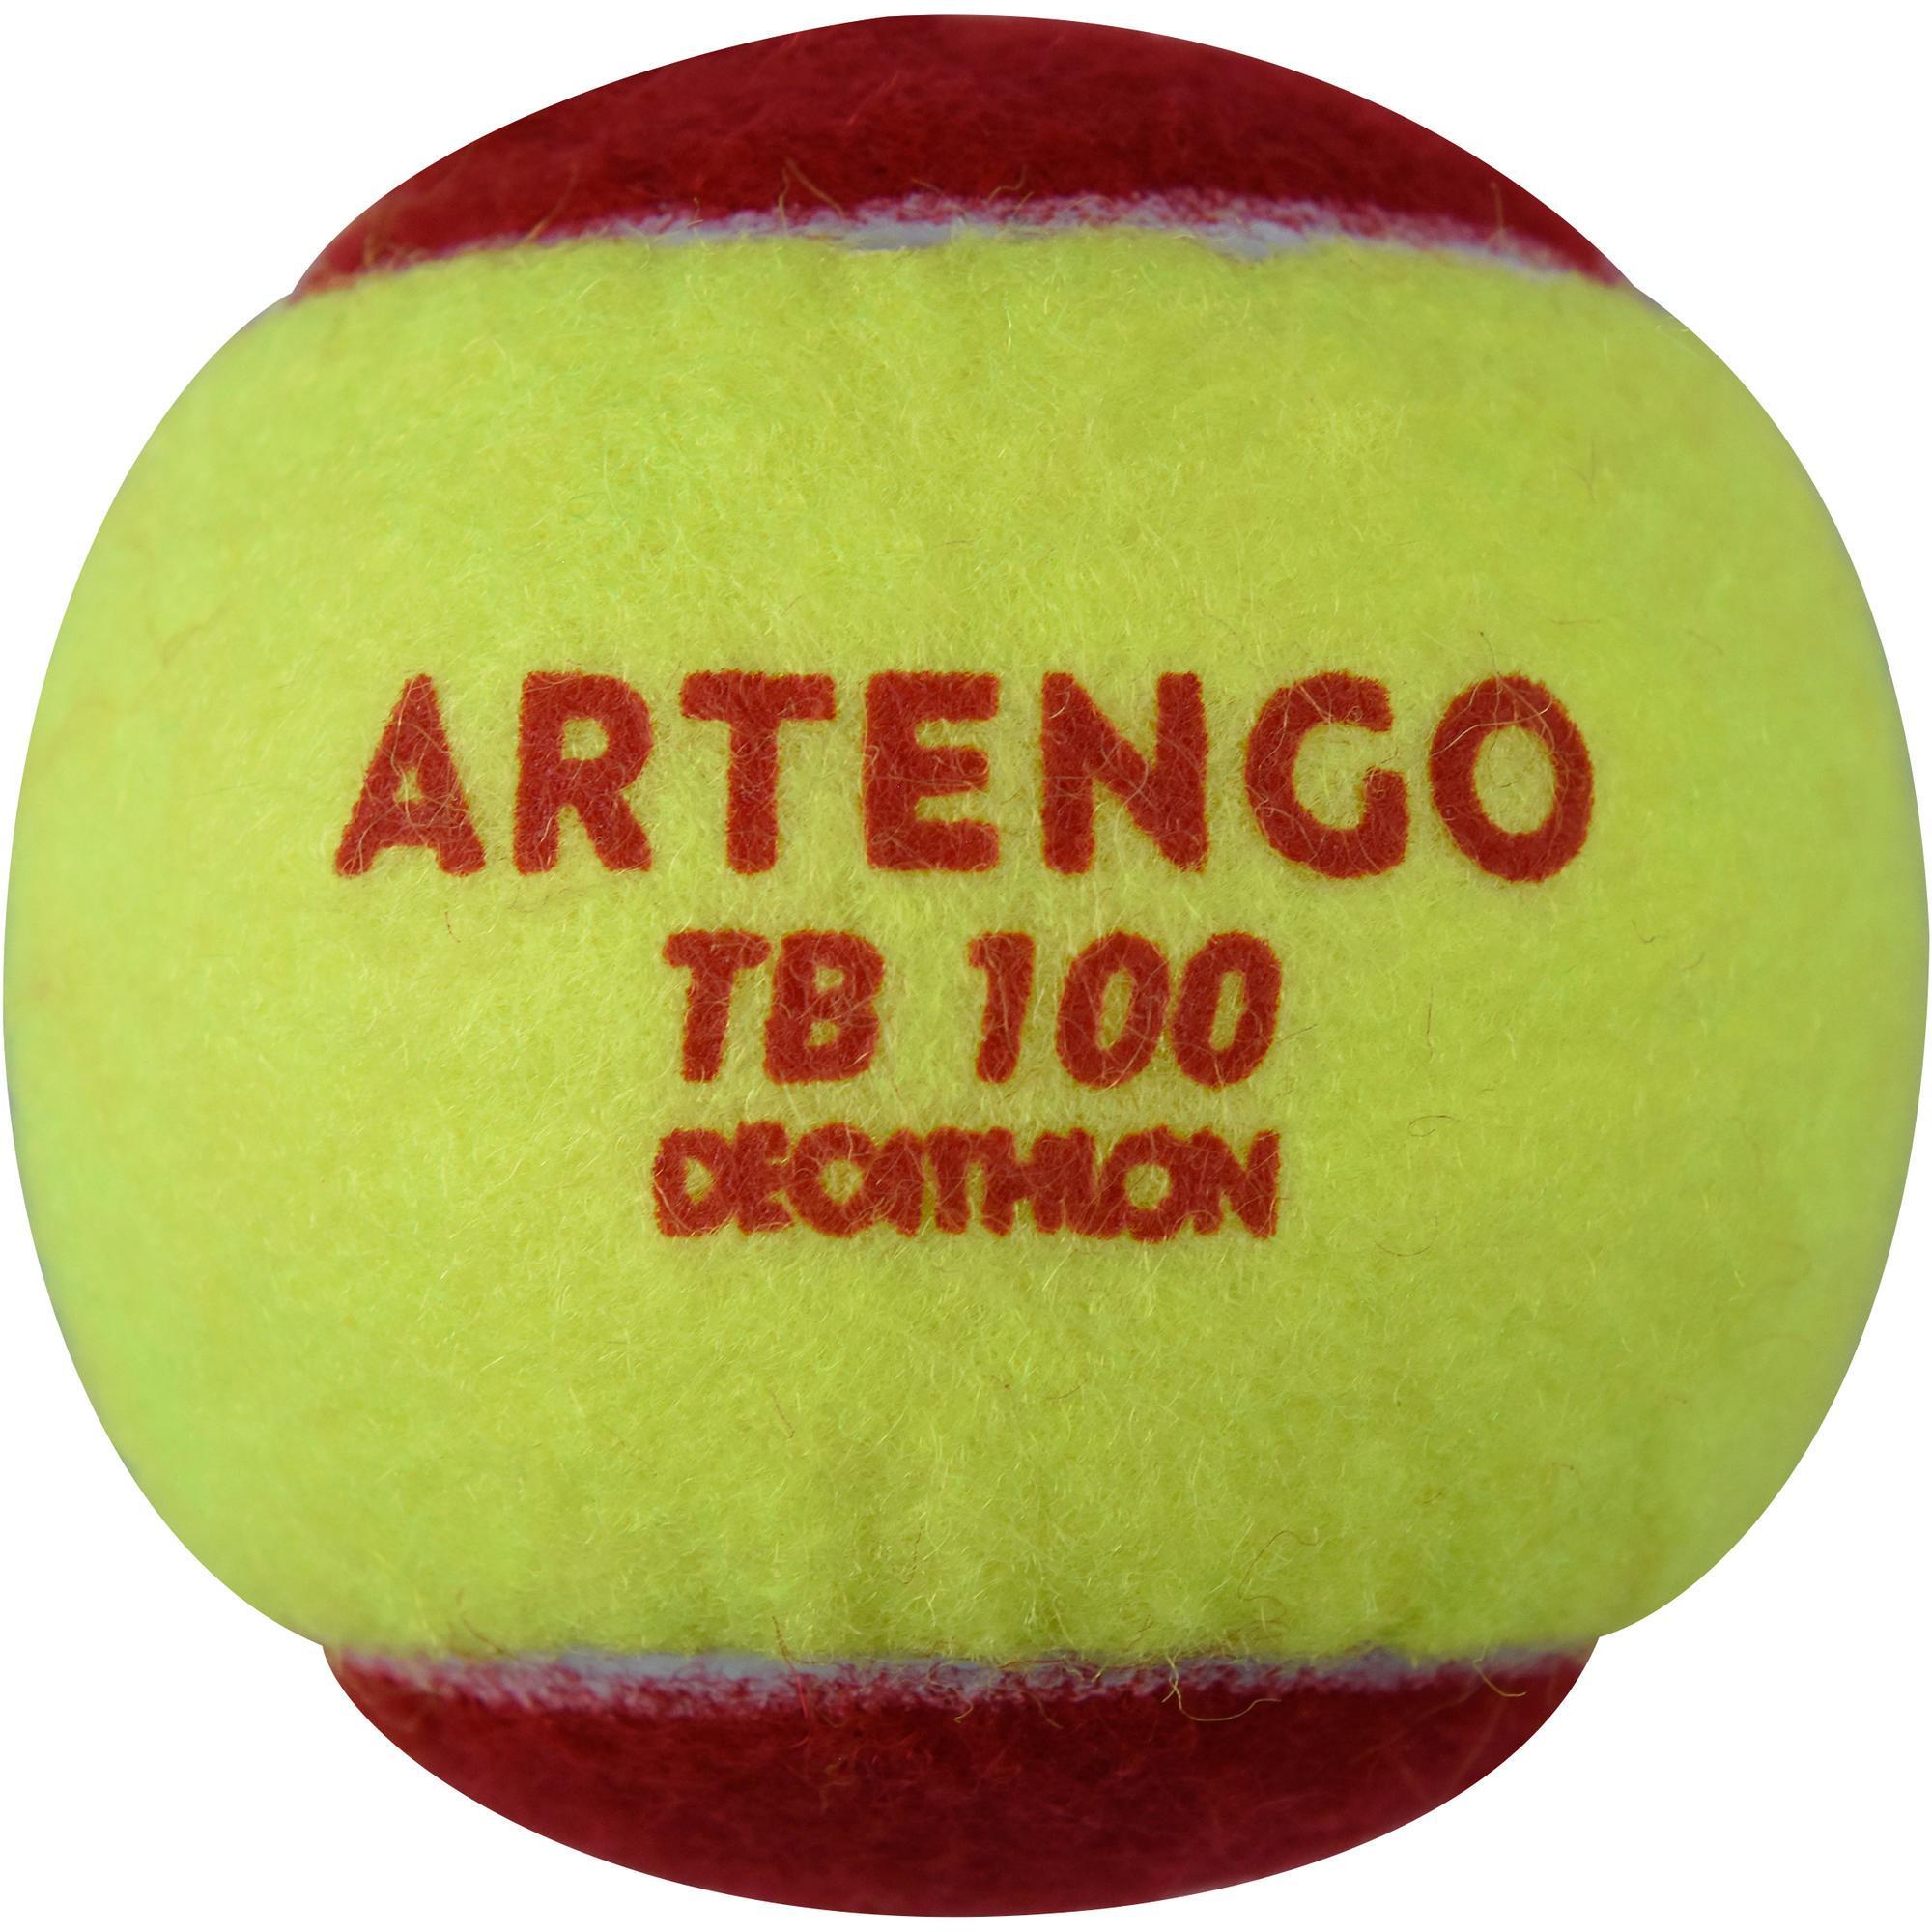 decathlon tennis balls